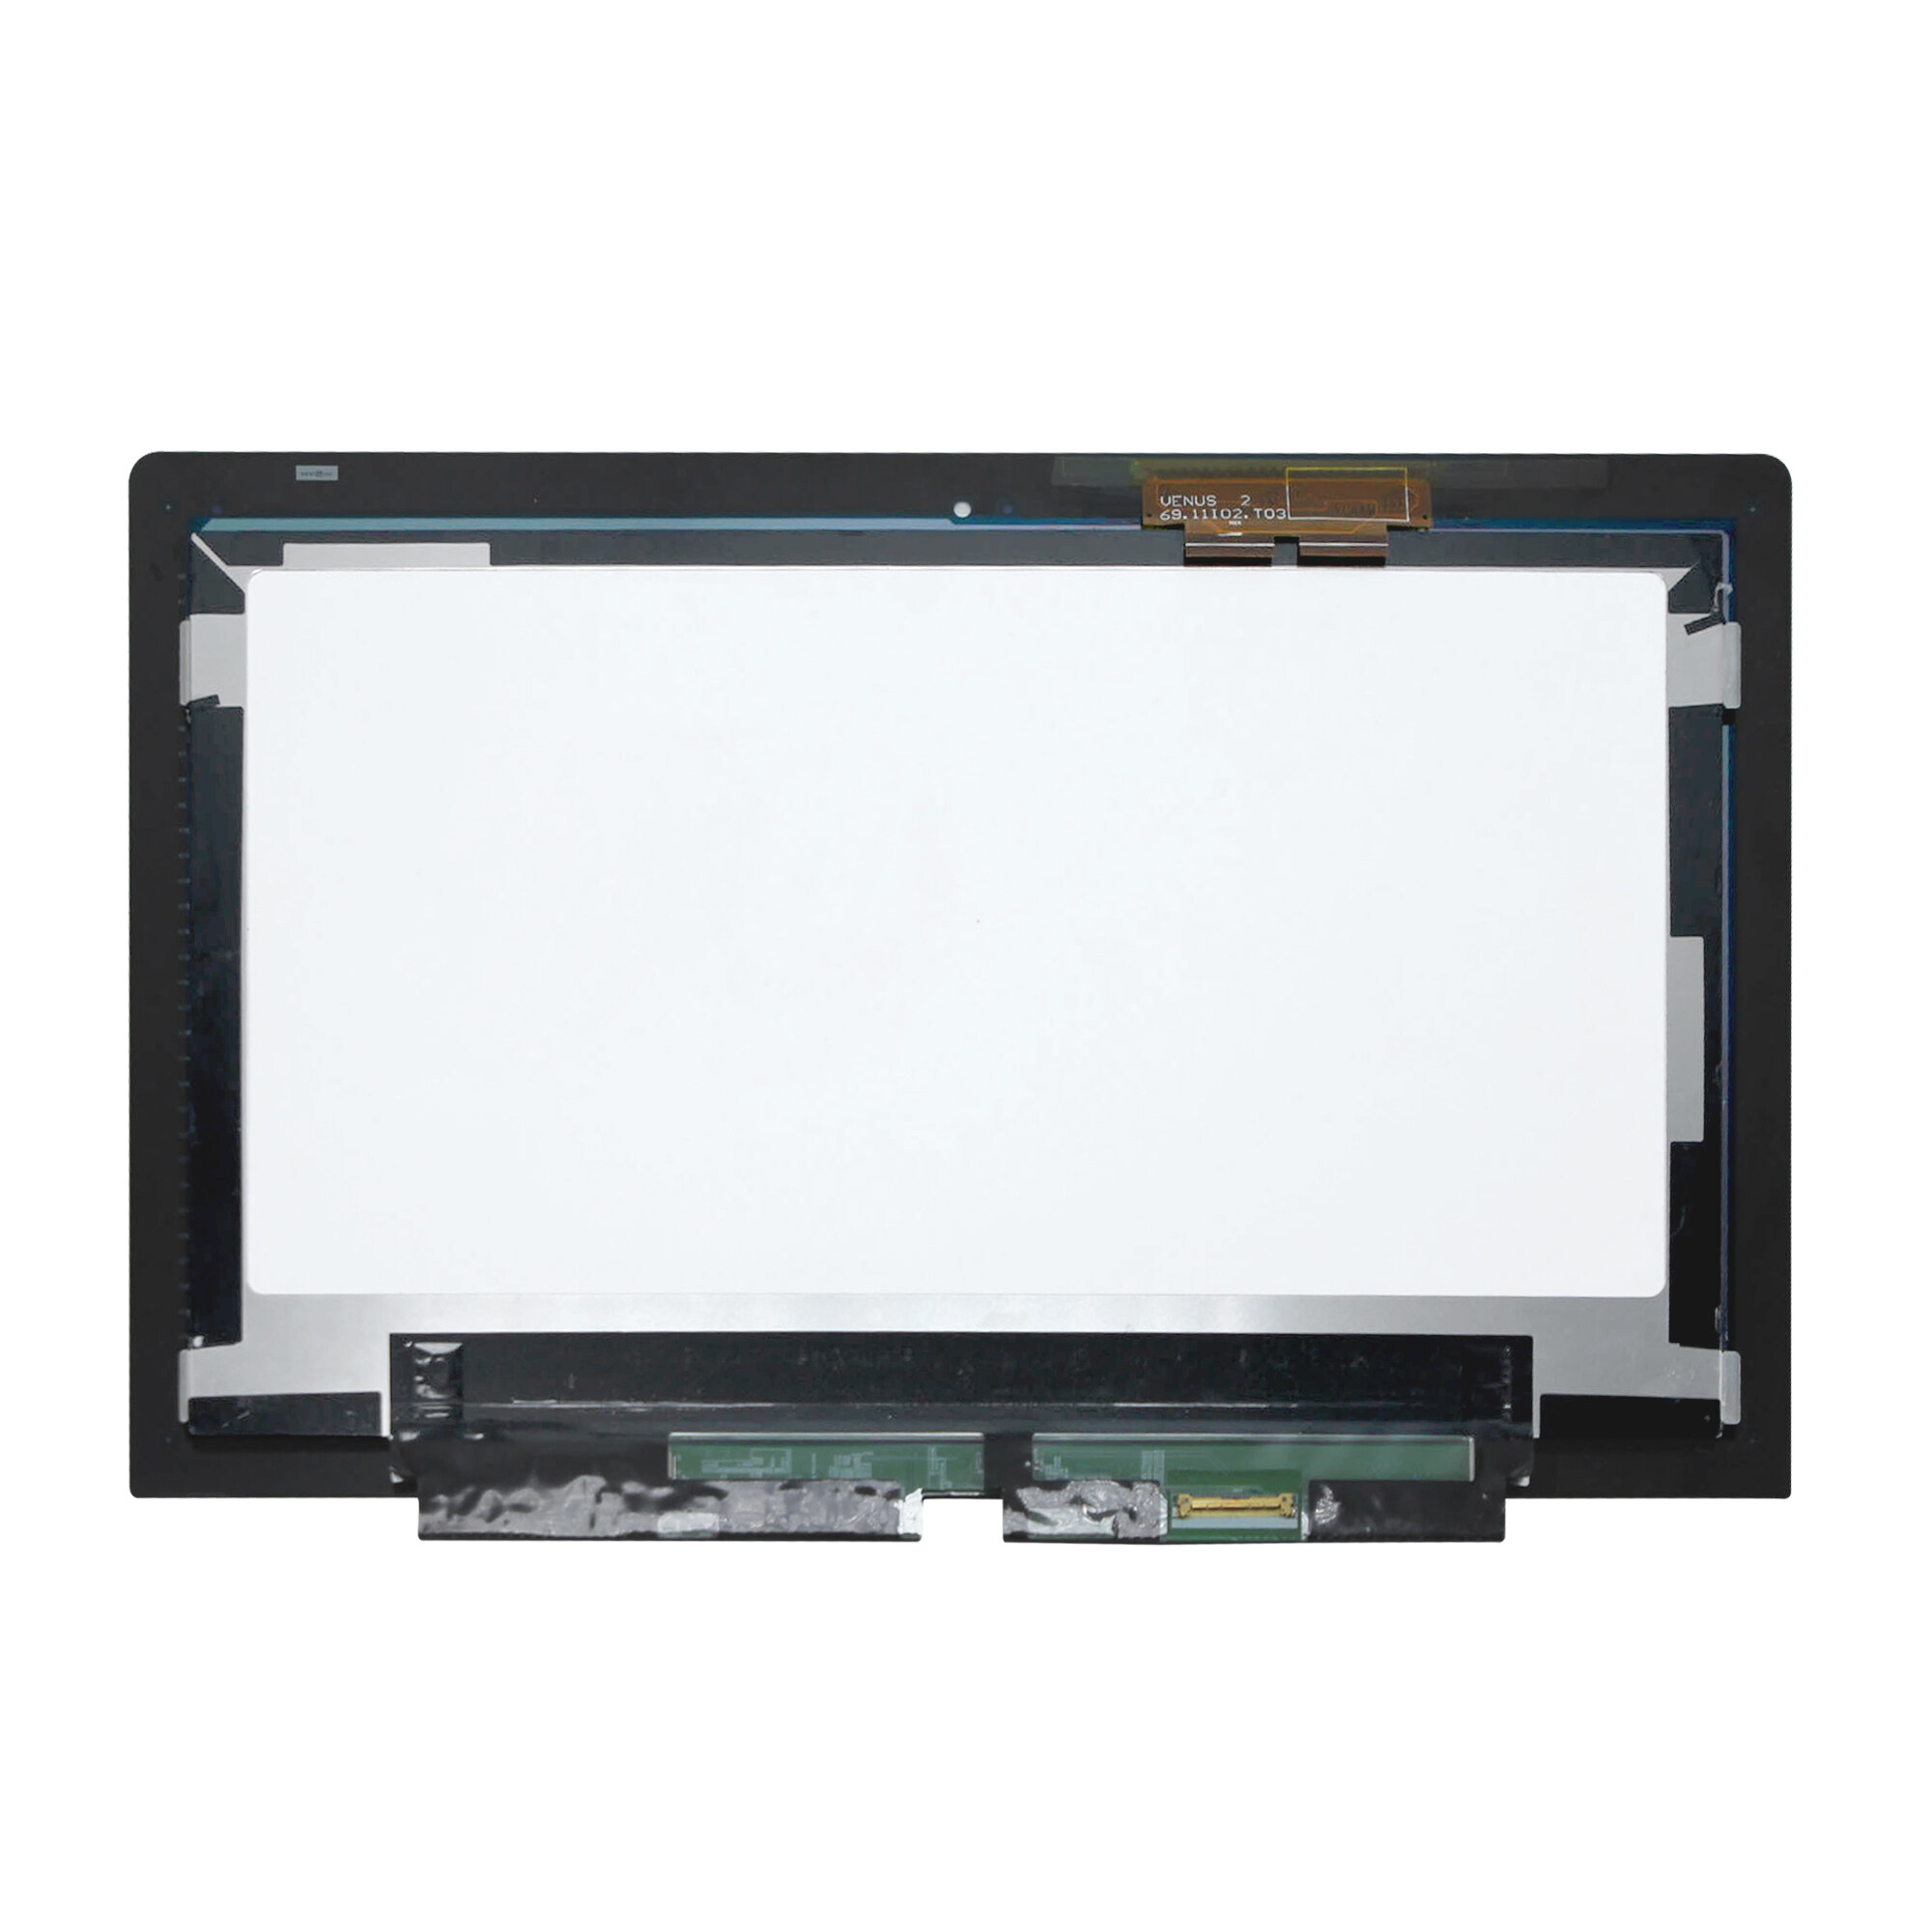 11.6" B116XAT02.0 LCD Touch Screen Display + Bezel for LENOVO IDEAPAD YOGA 11 20332